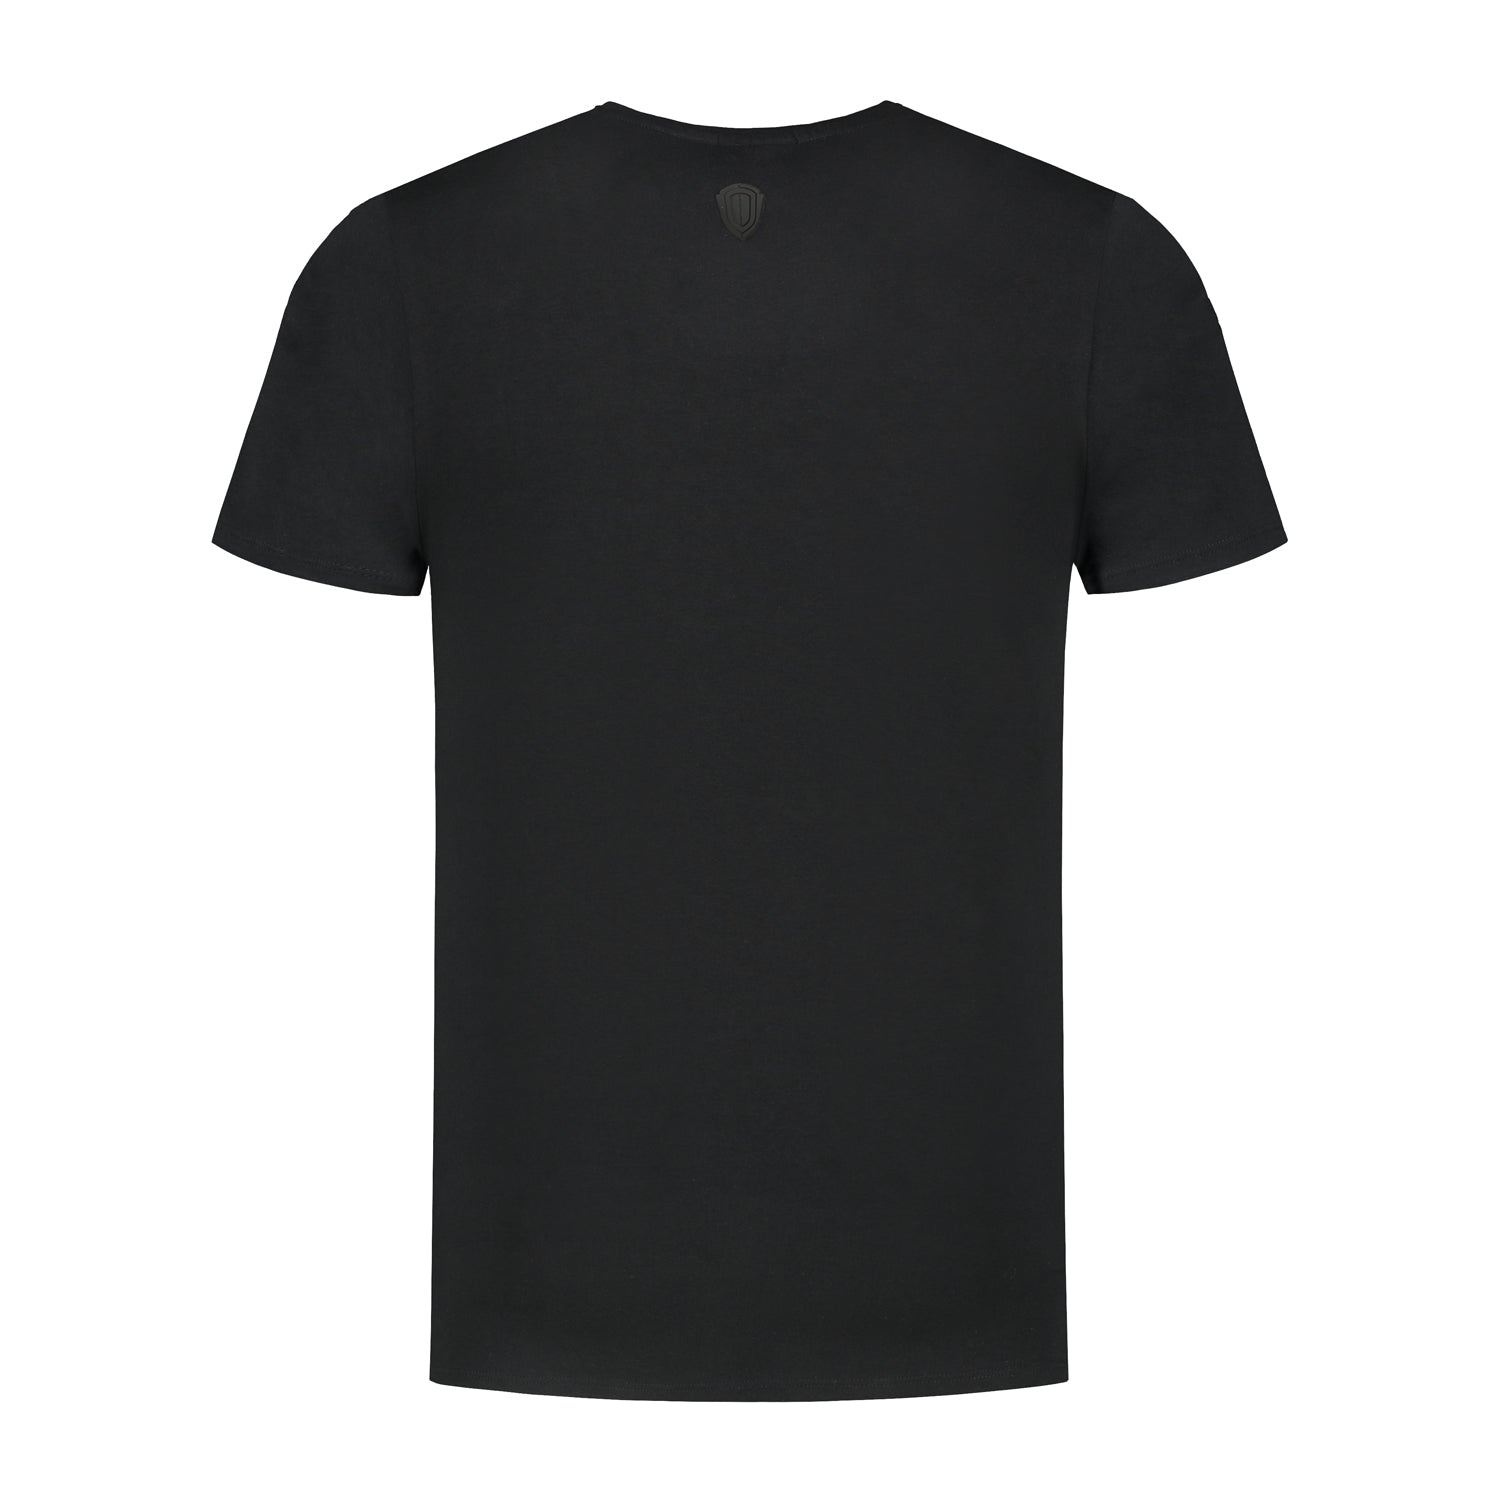 Black on Black Brand T-shirt